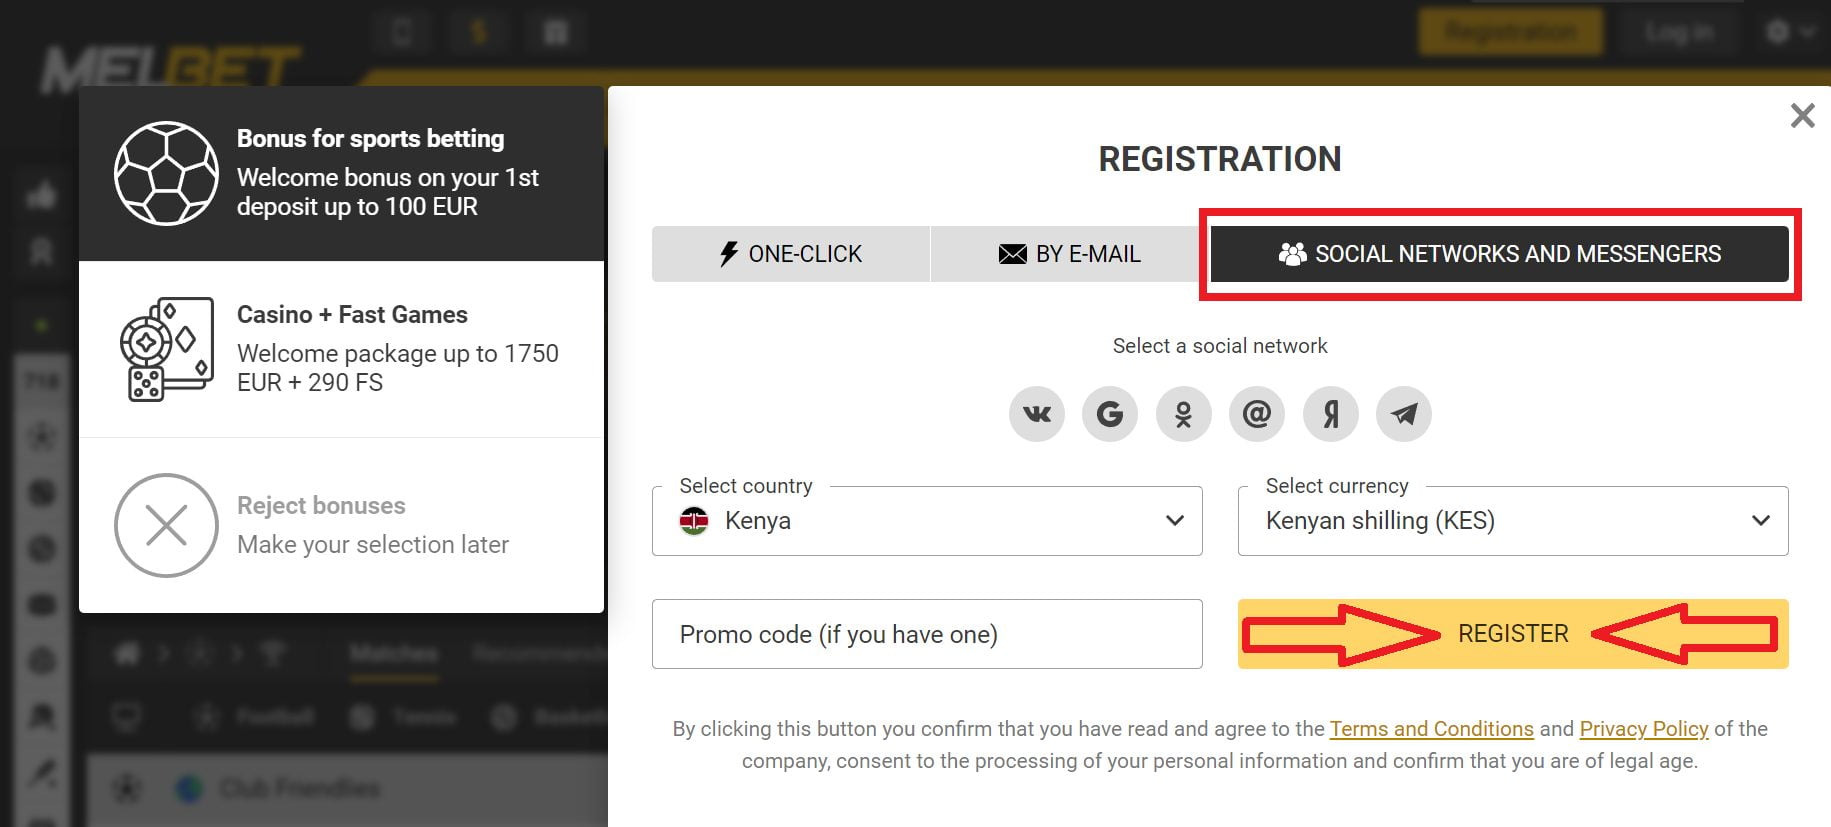 Melbet registration via the mobile application